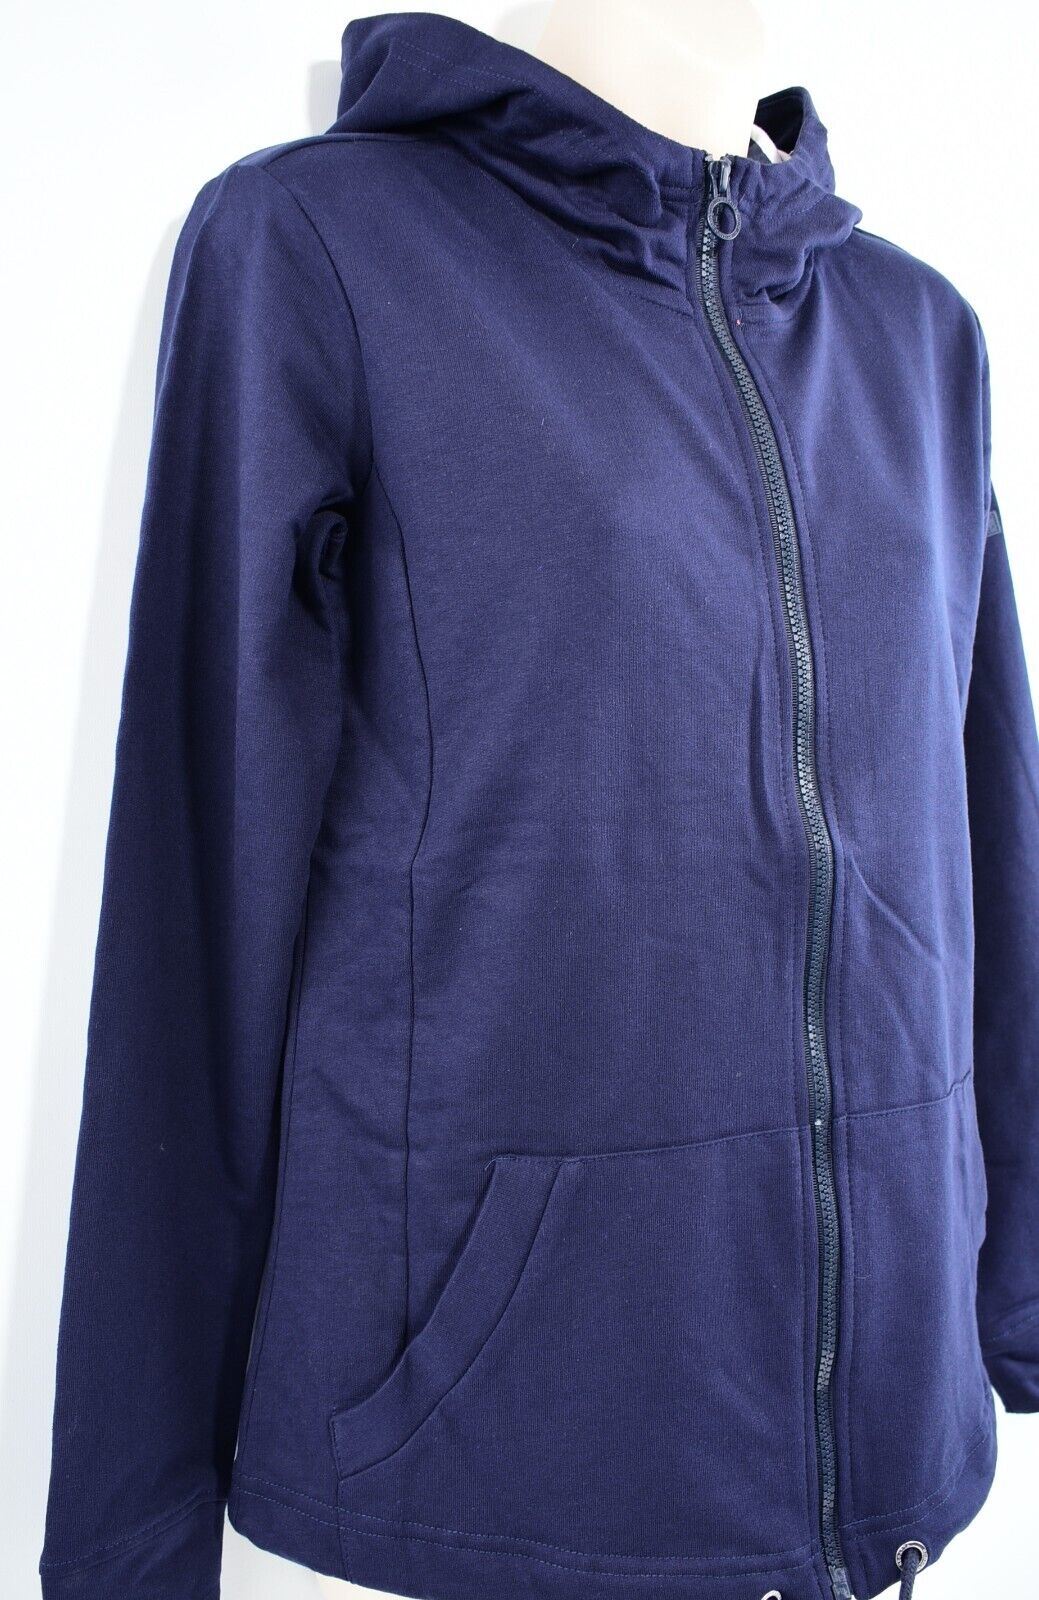 REGATTA Womens BAYARMA Zip Hoodie Jacket, Navy Blue, size L /UK 14